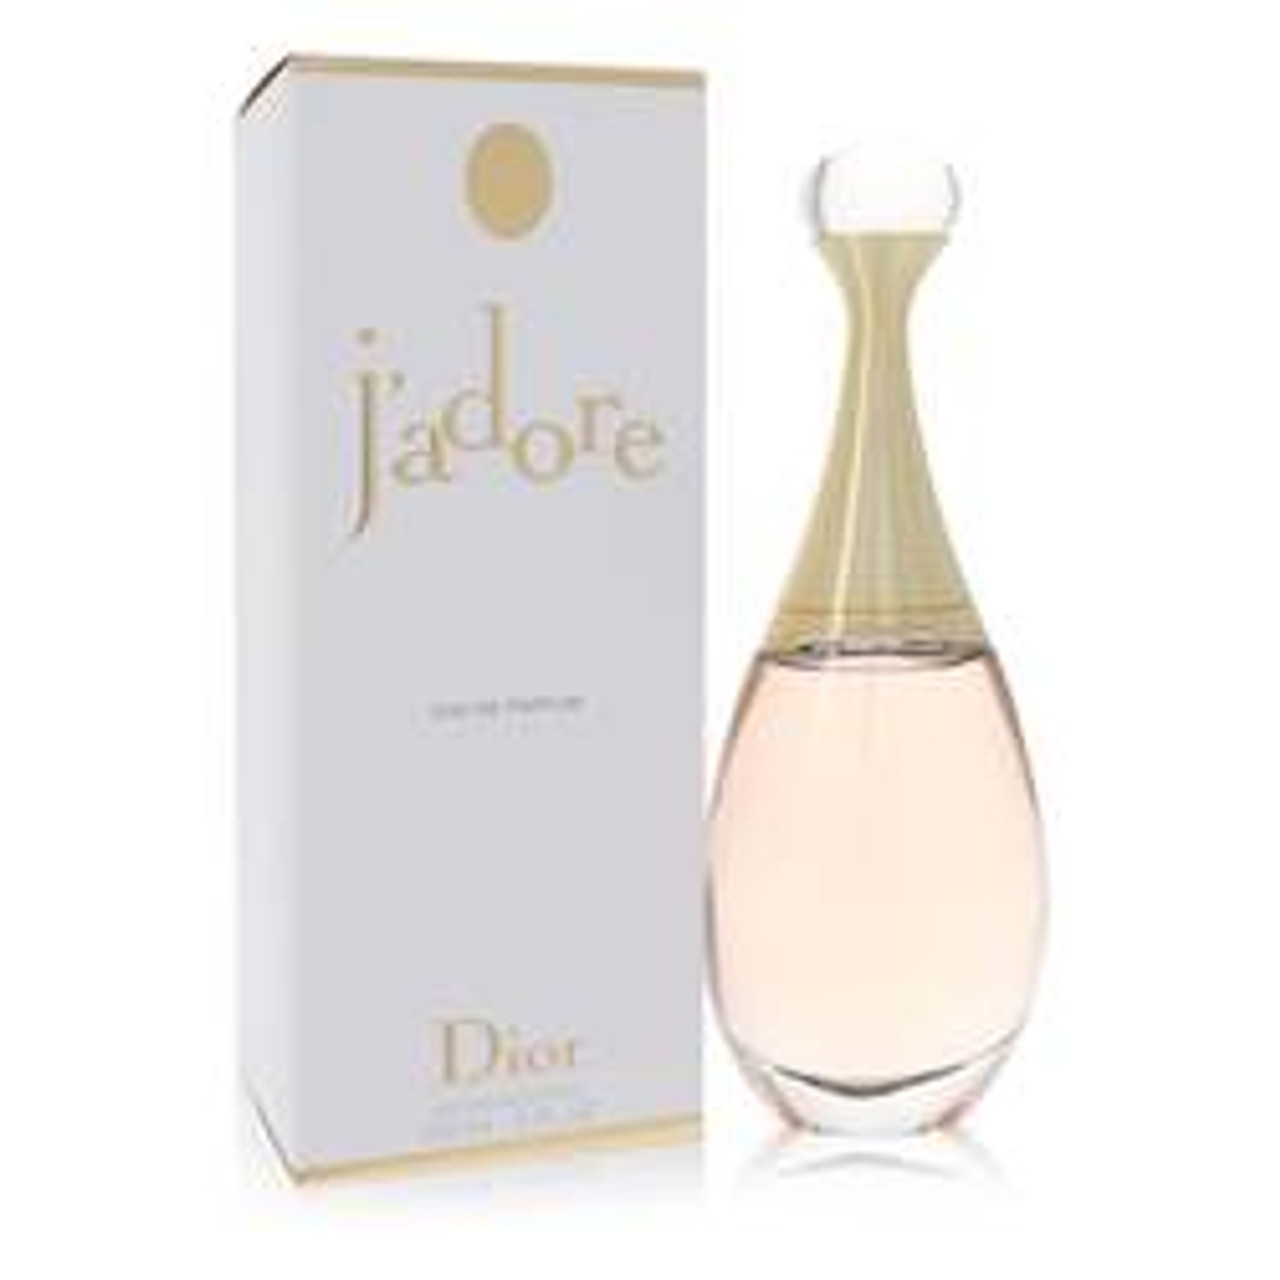 Jadore Perfume By Christian Dior Eau De Parfum Spray 5 oz for Women - *Pre-Order